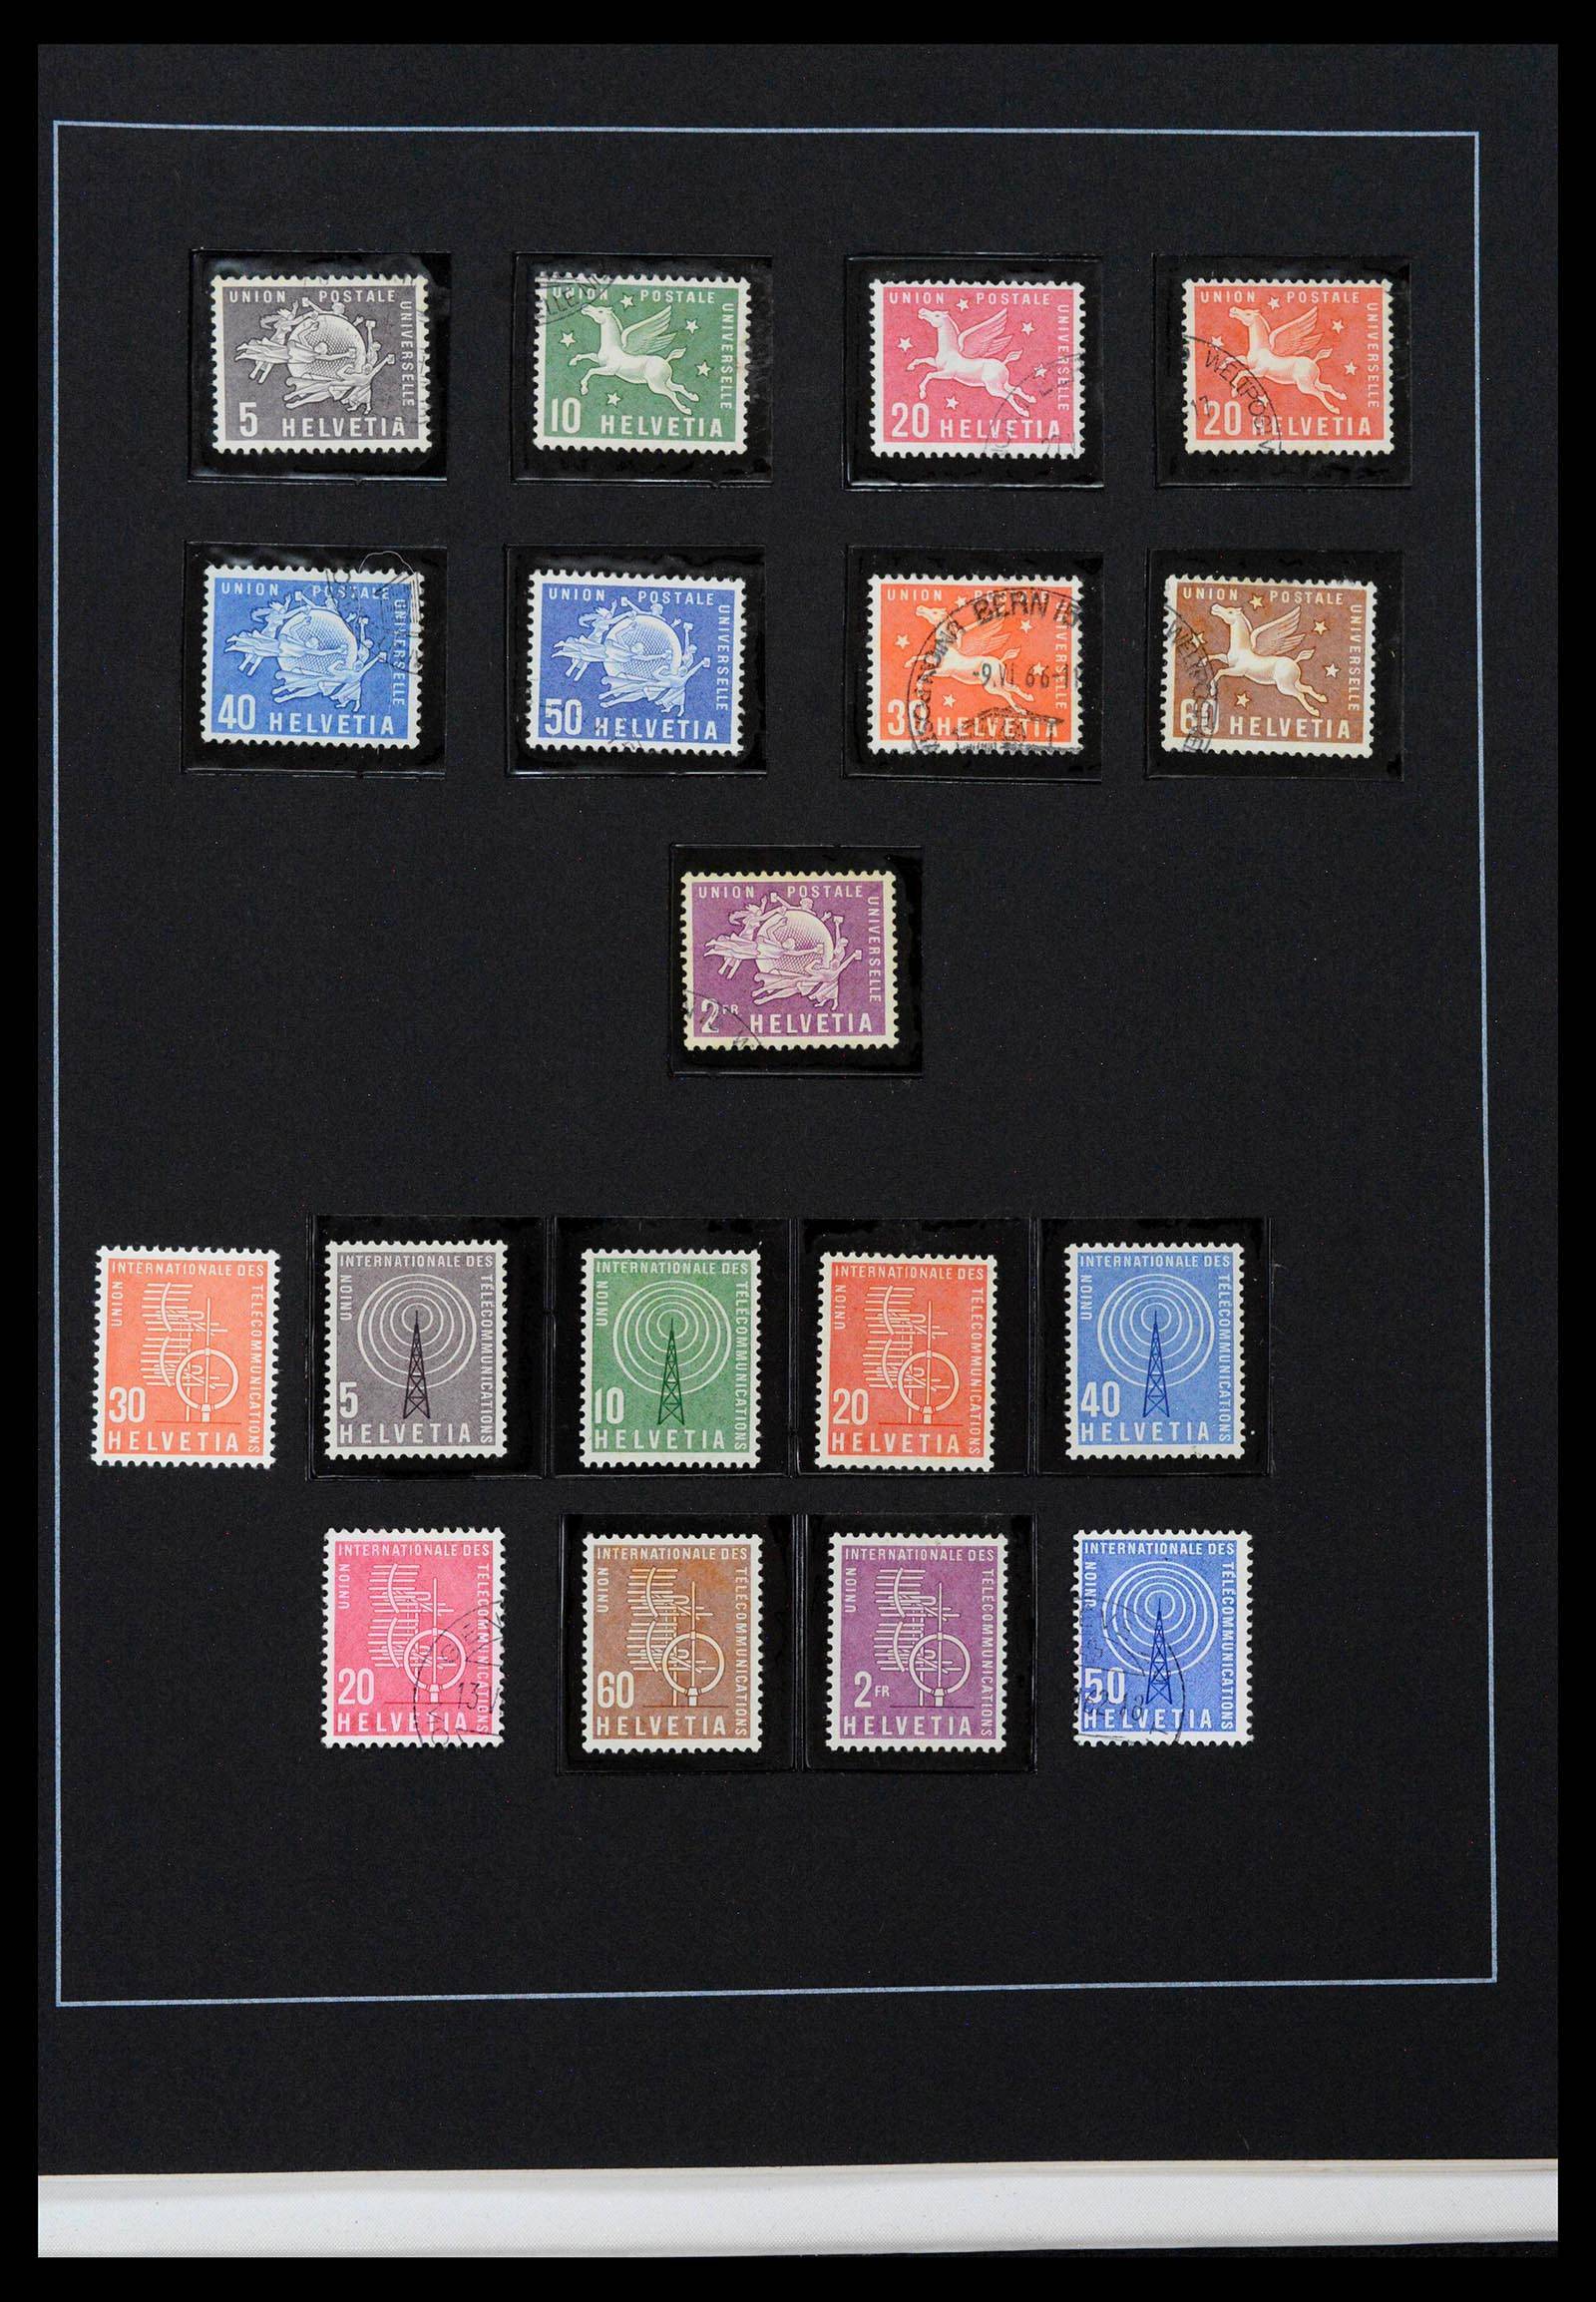 39235 0086 - Stamp collection 39235 Switzerland 1843-1960.